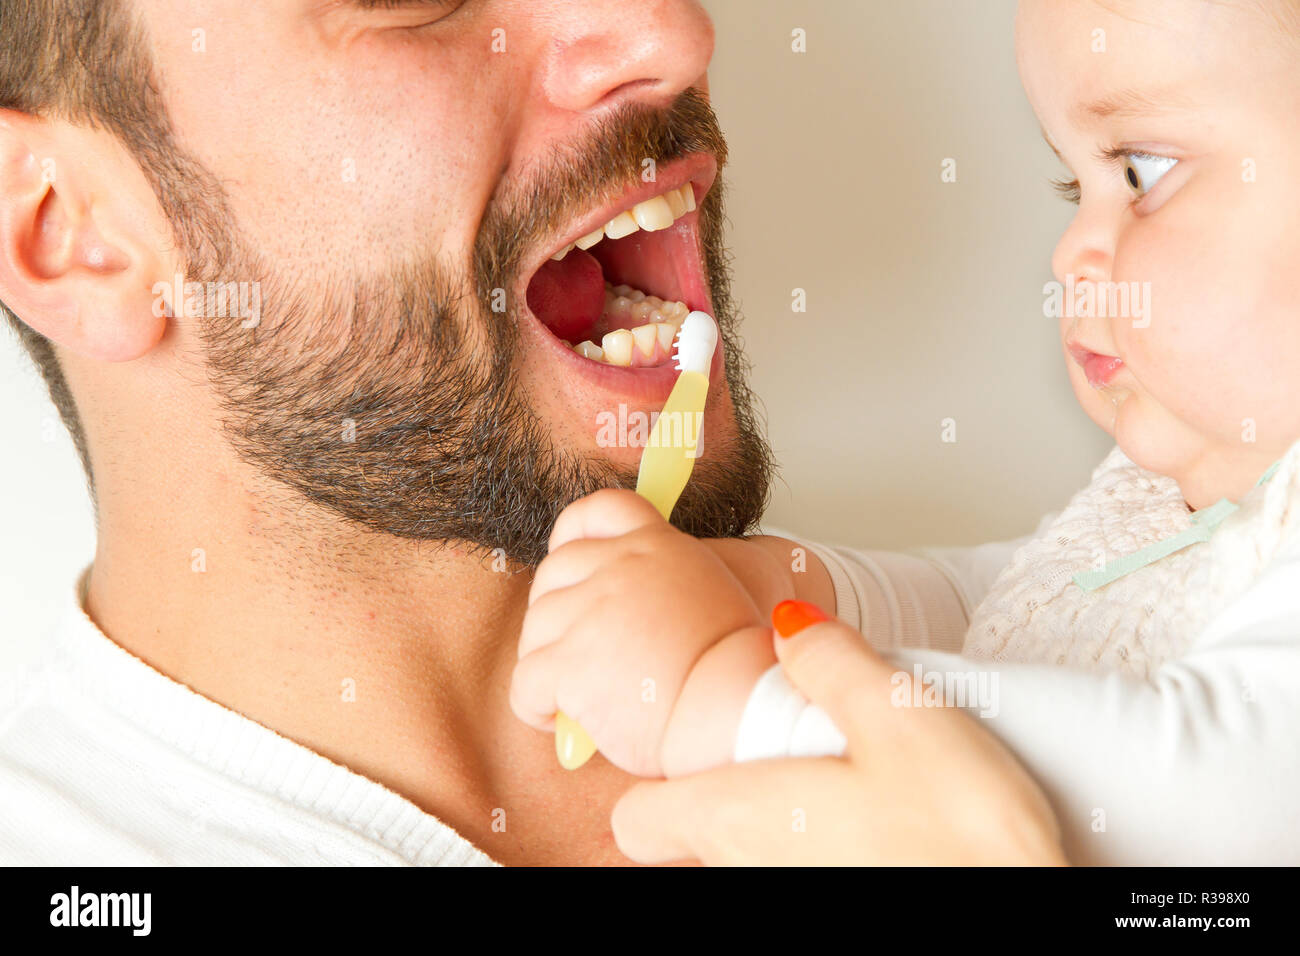 baby brushes teeth of papa Stock Photo